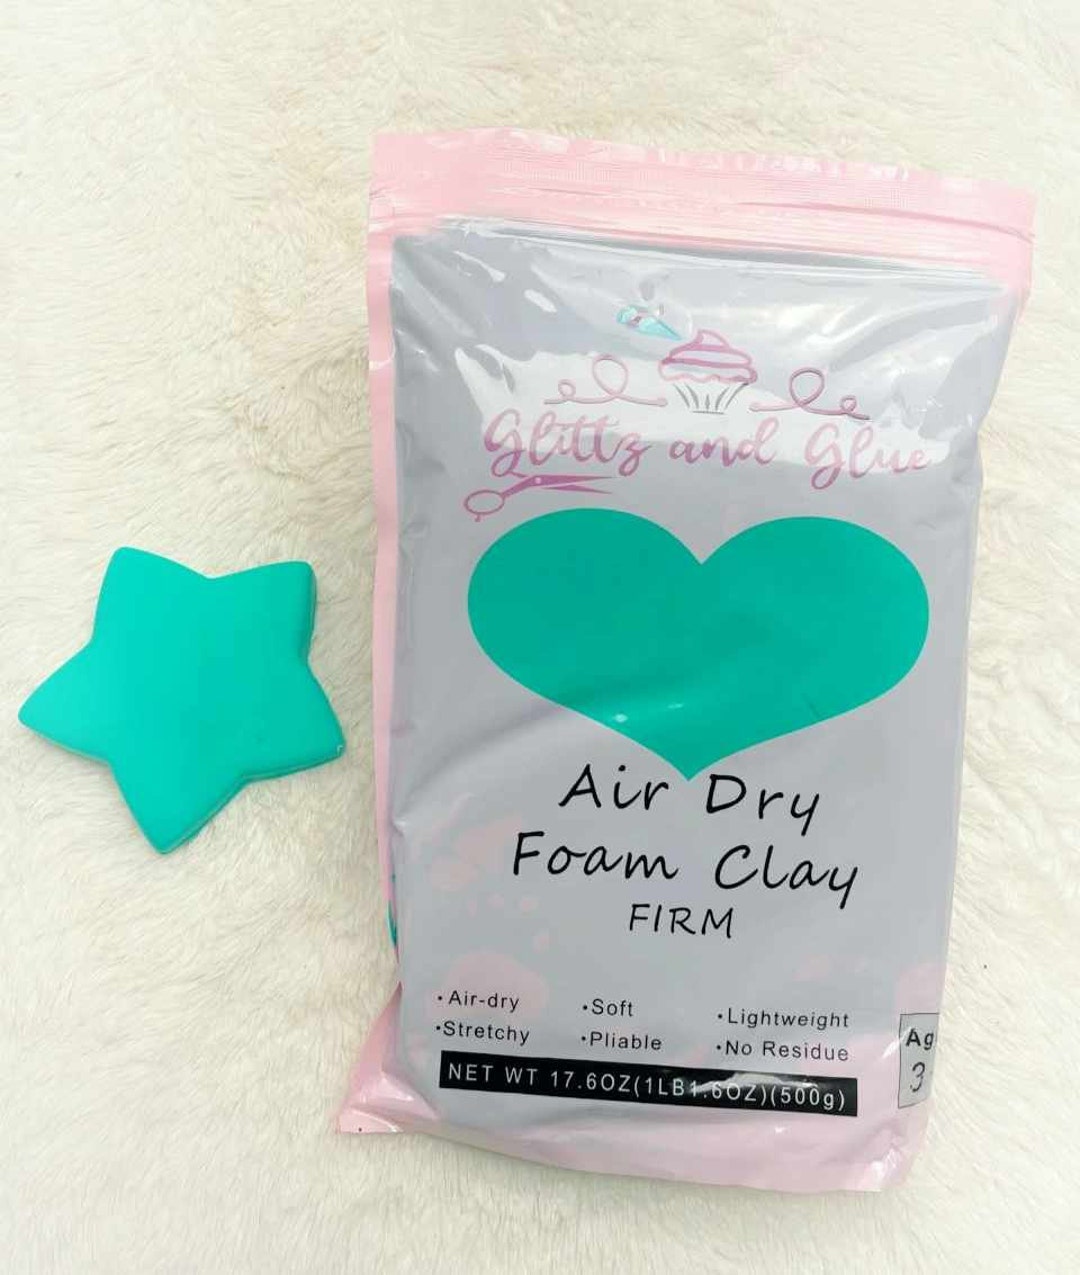 Blue Air Dry Lightweight Foam Clay